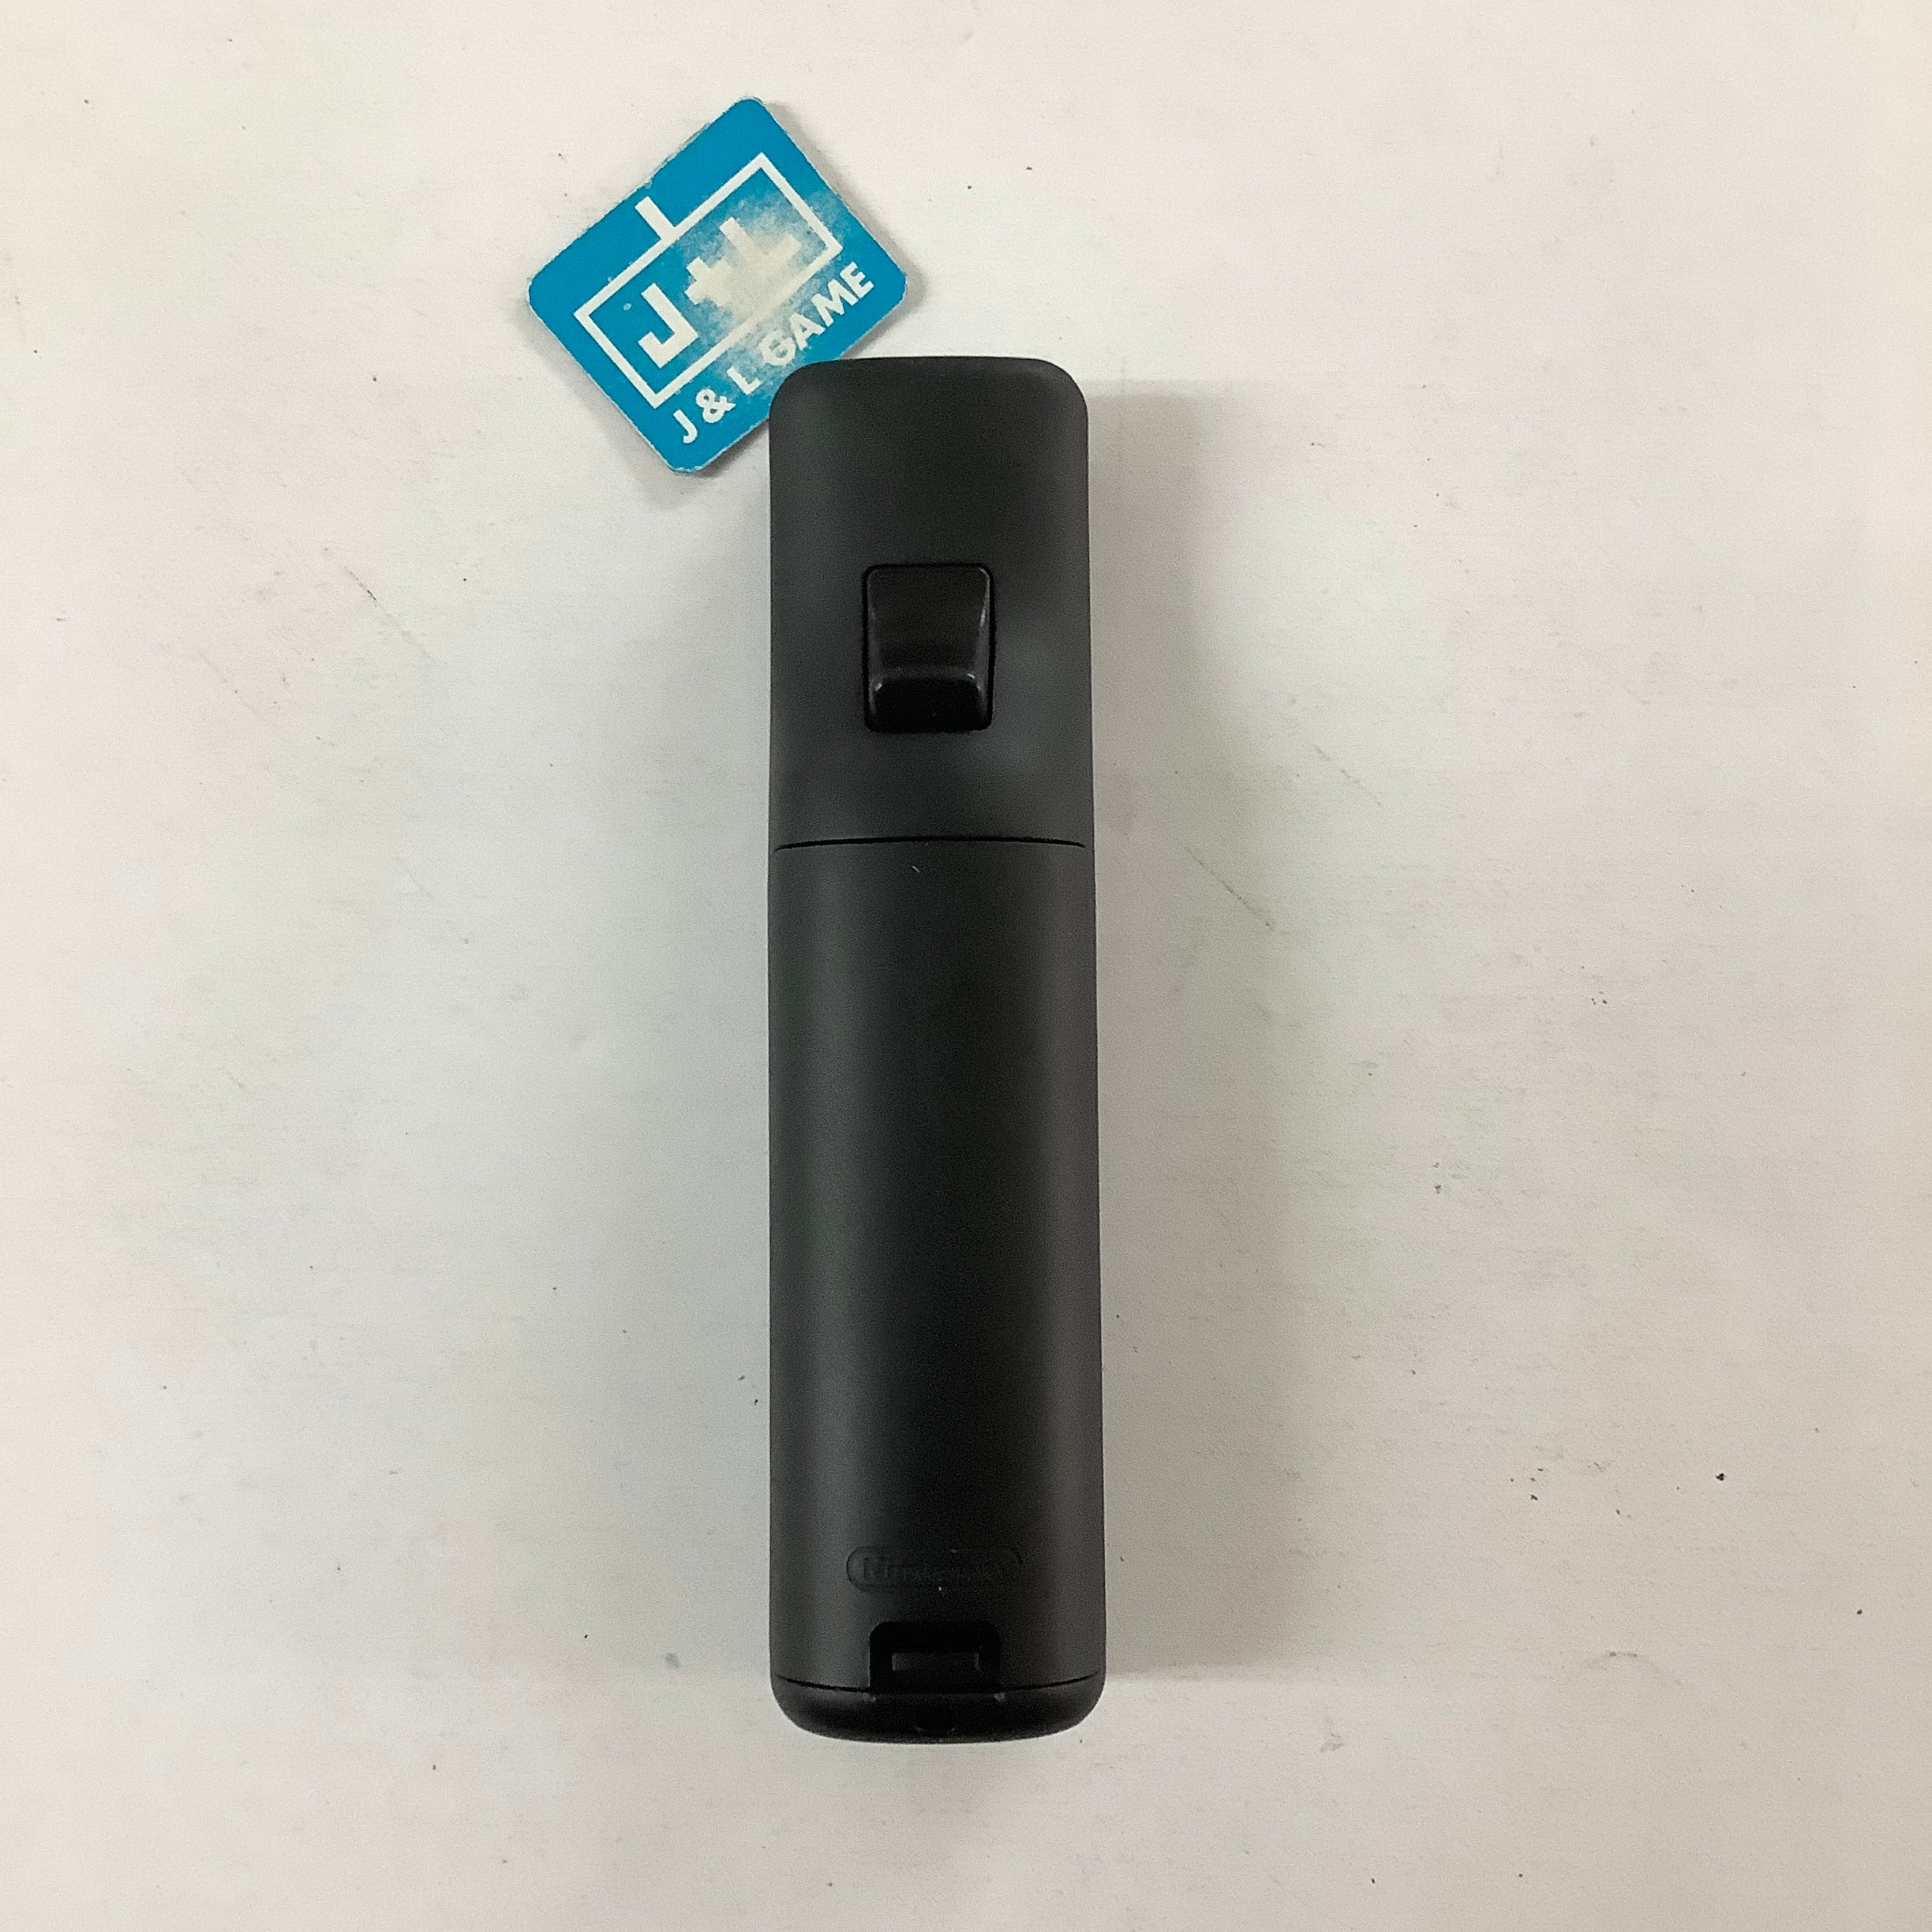 Nintendo Wii U Remote Controller Plus (Black)  - Nintendo Wii U [Pre-Owned] Accessories Nintendo   